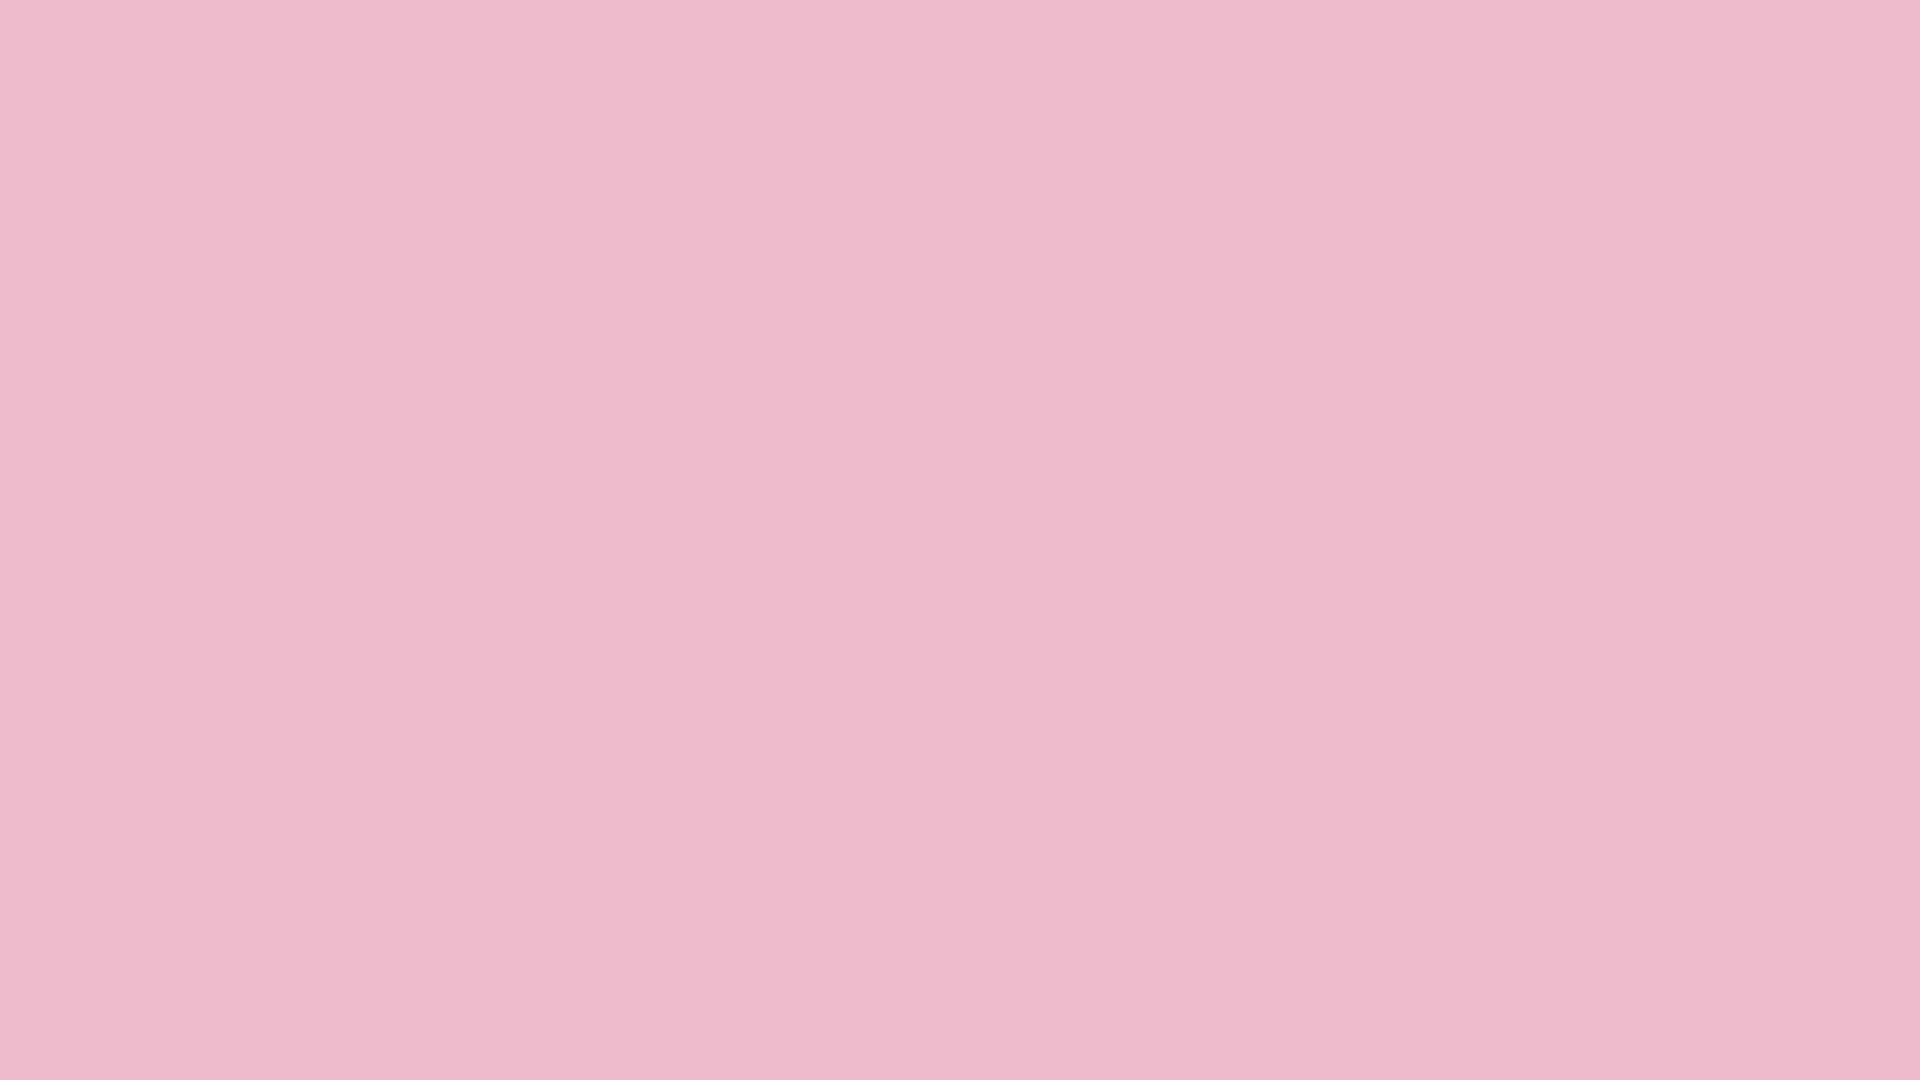 Deep Pastel Pink Solid Background Wallpaper